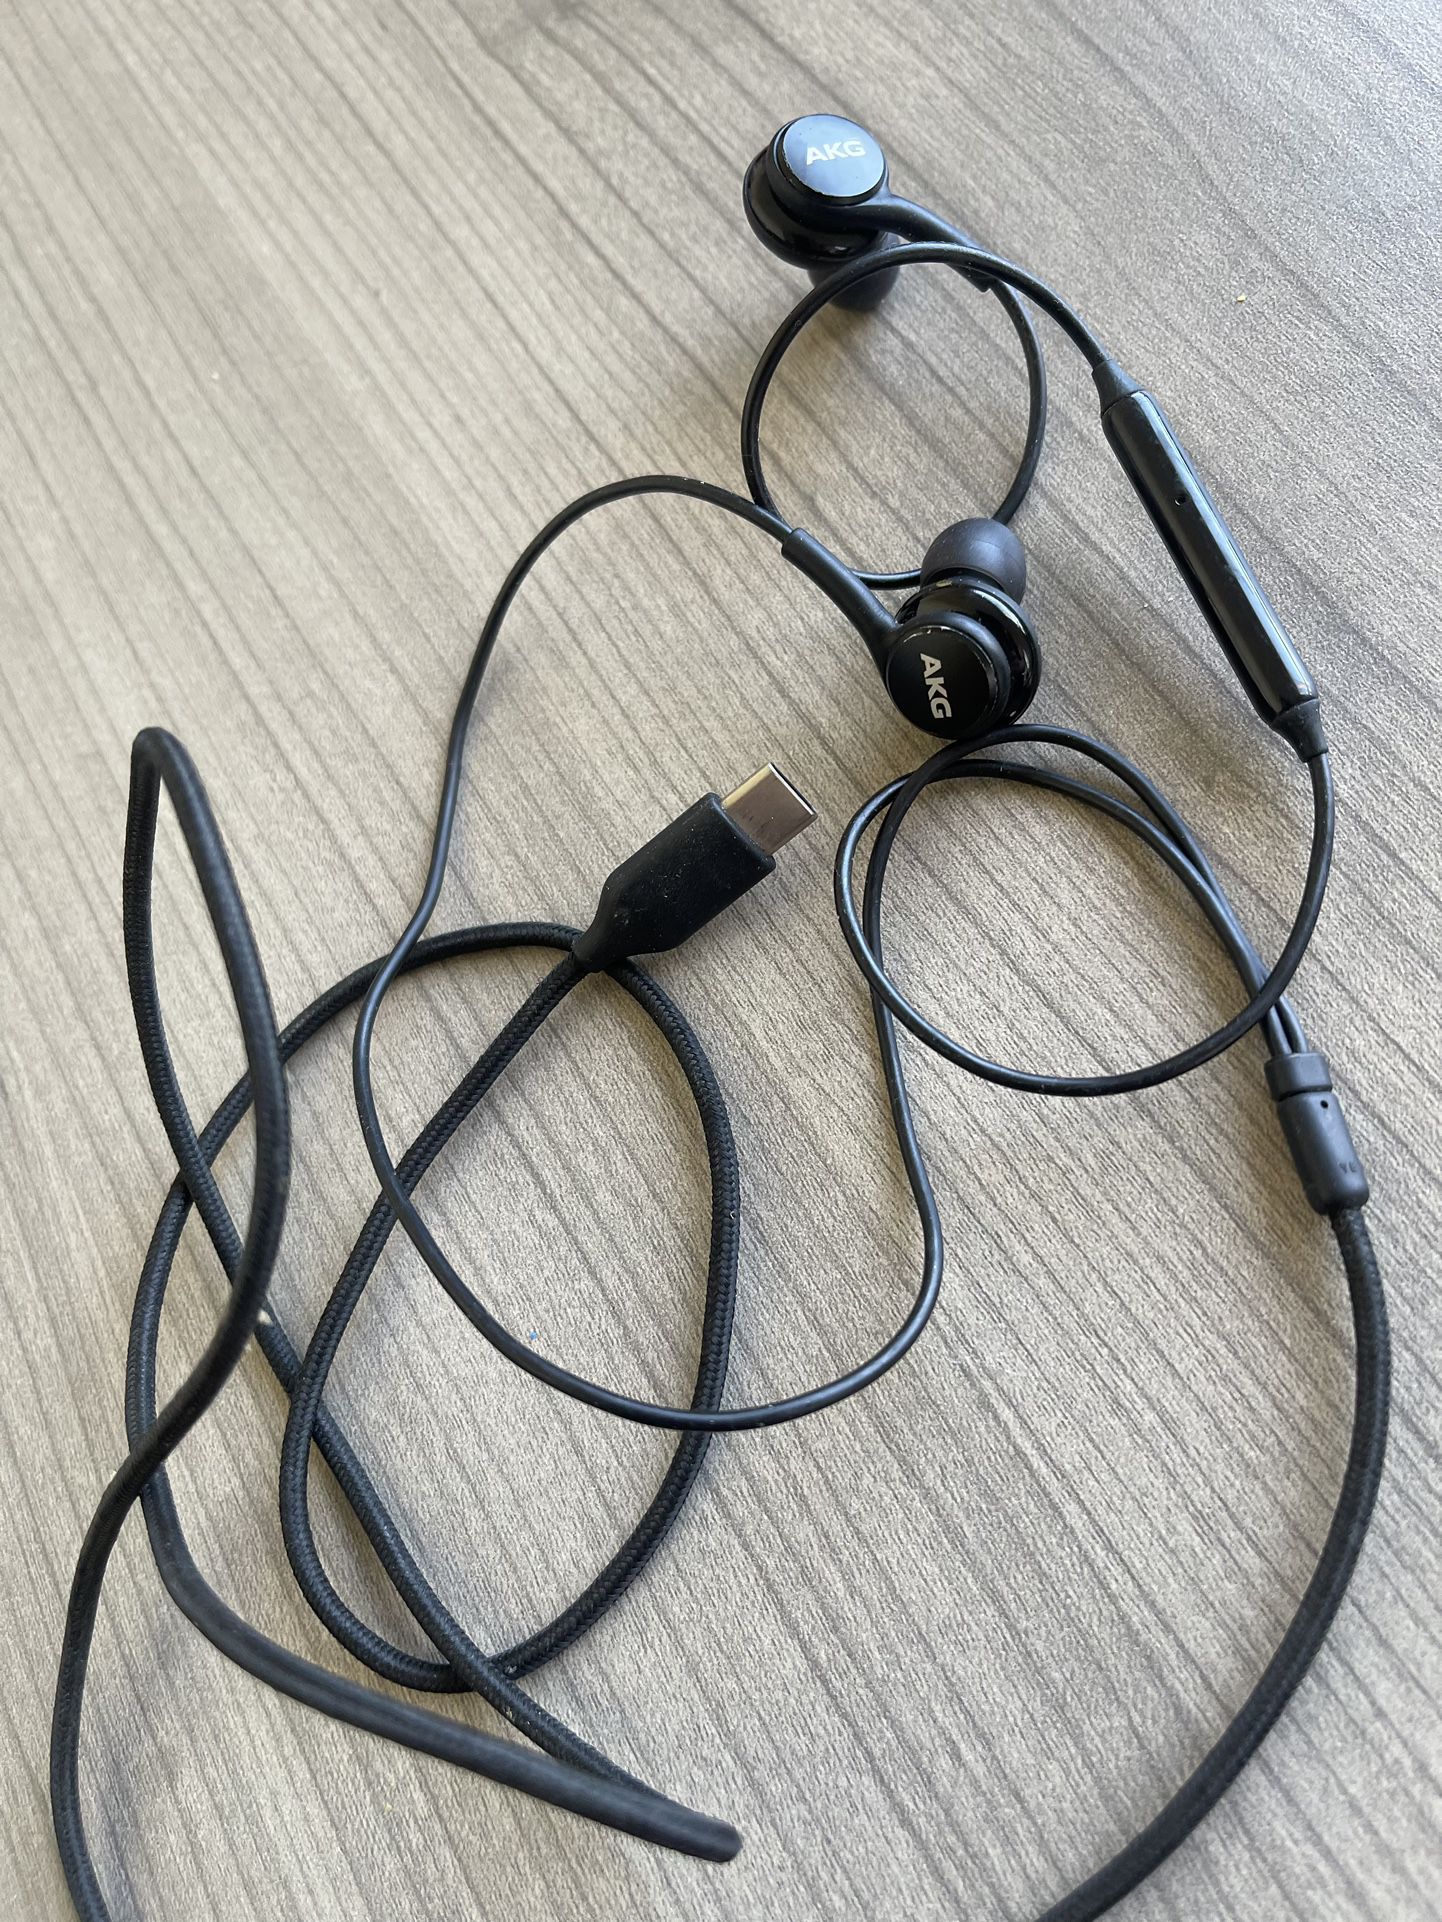 Akg wired headphones.